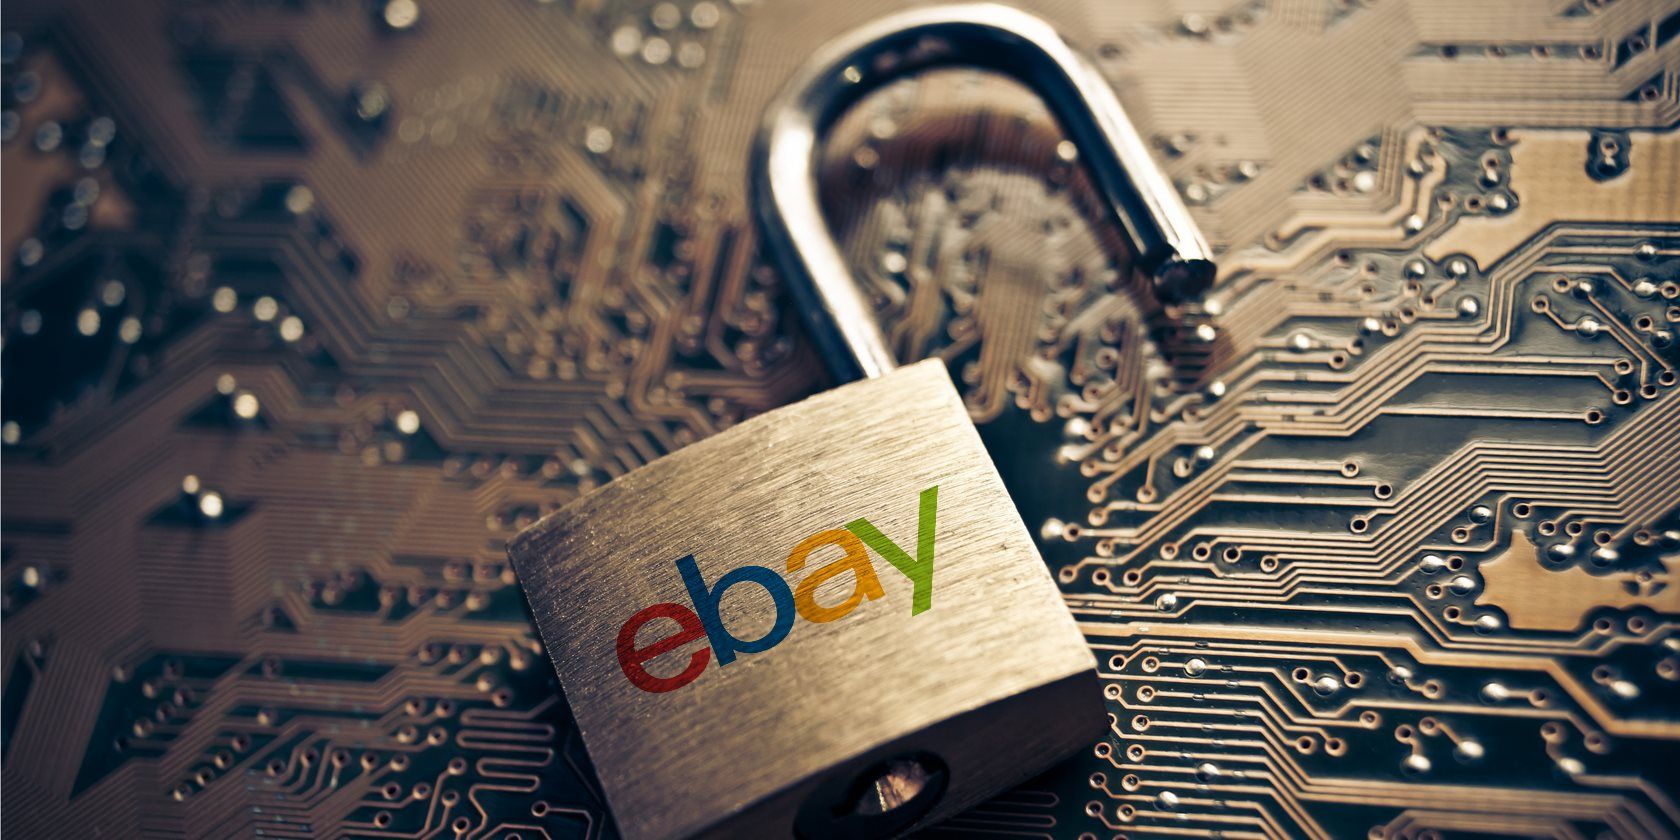 ebay data breach case study